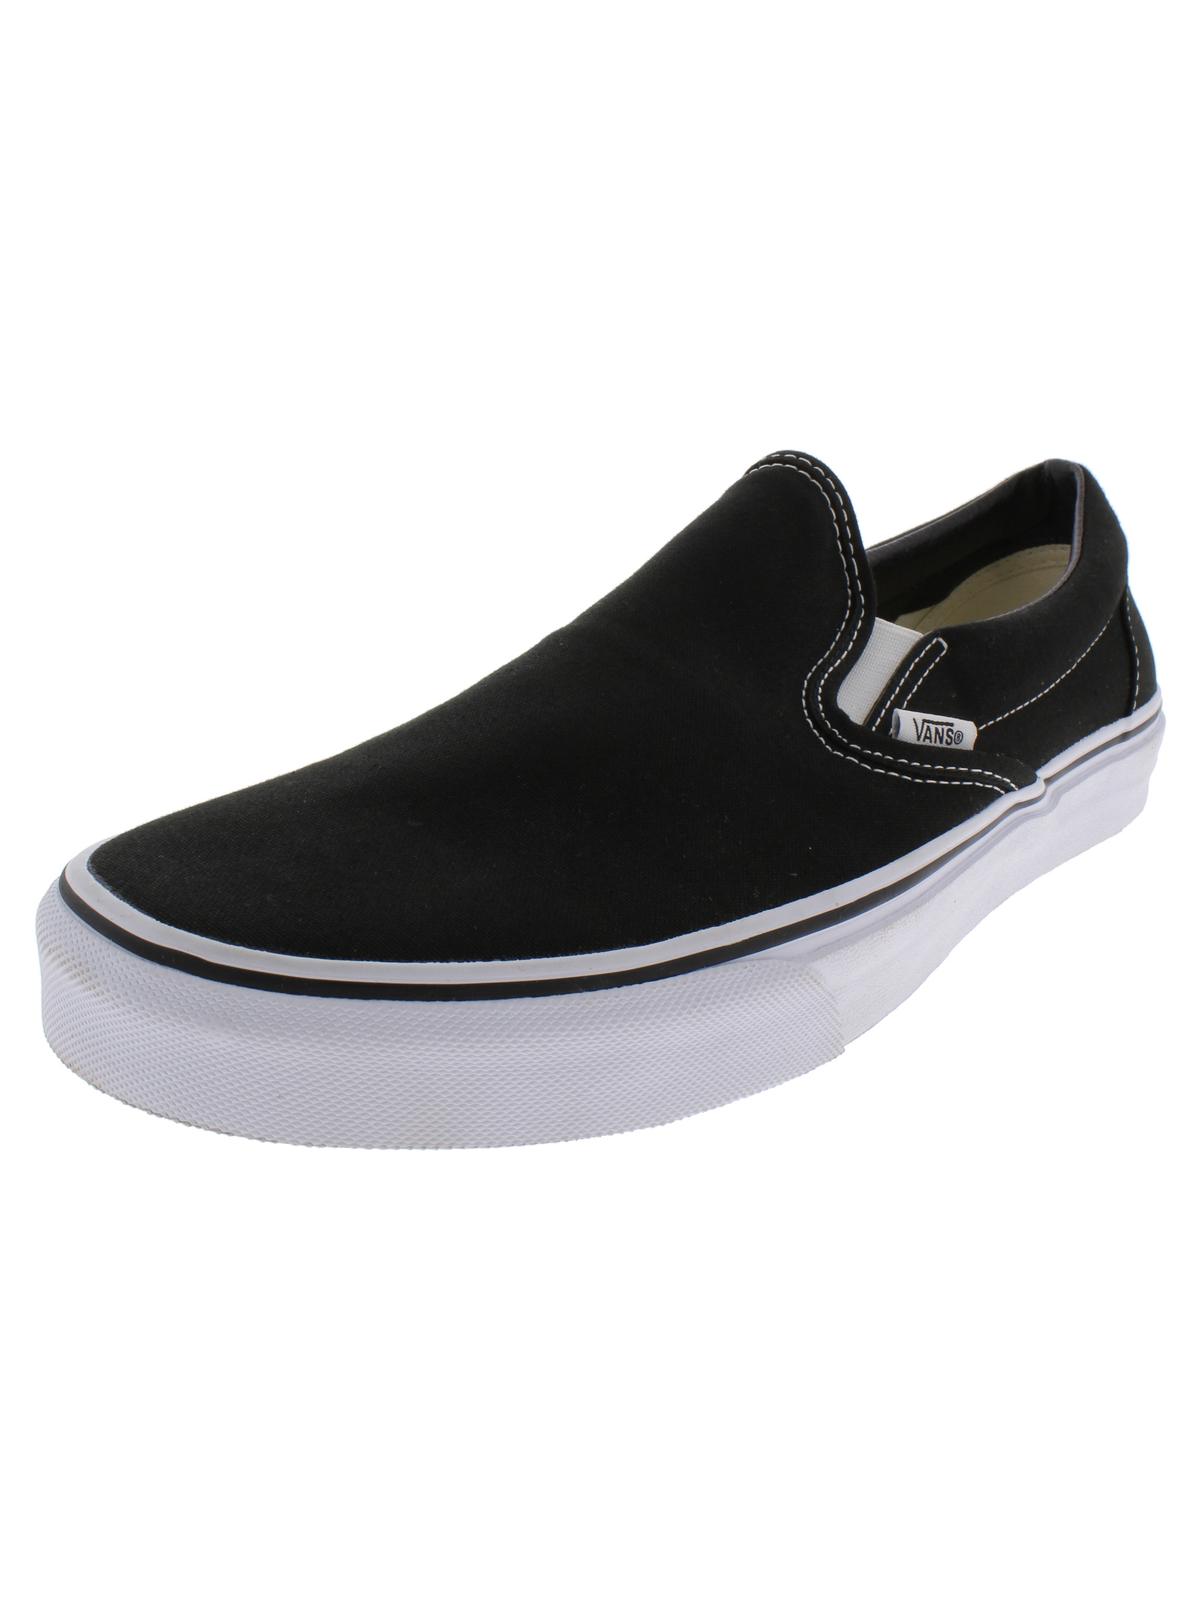 Vans Mens Classic Slip-On Canvas Low Top Casual Shoes Black 13 Medium (D) - image 1 of 2